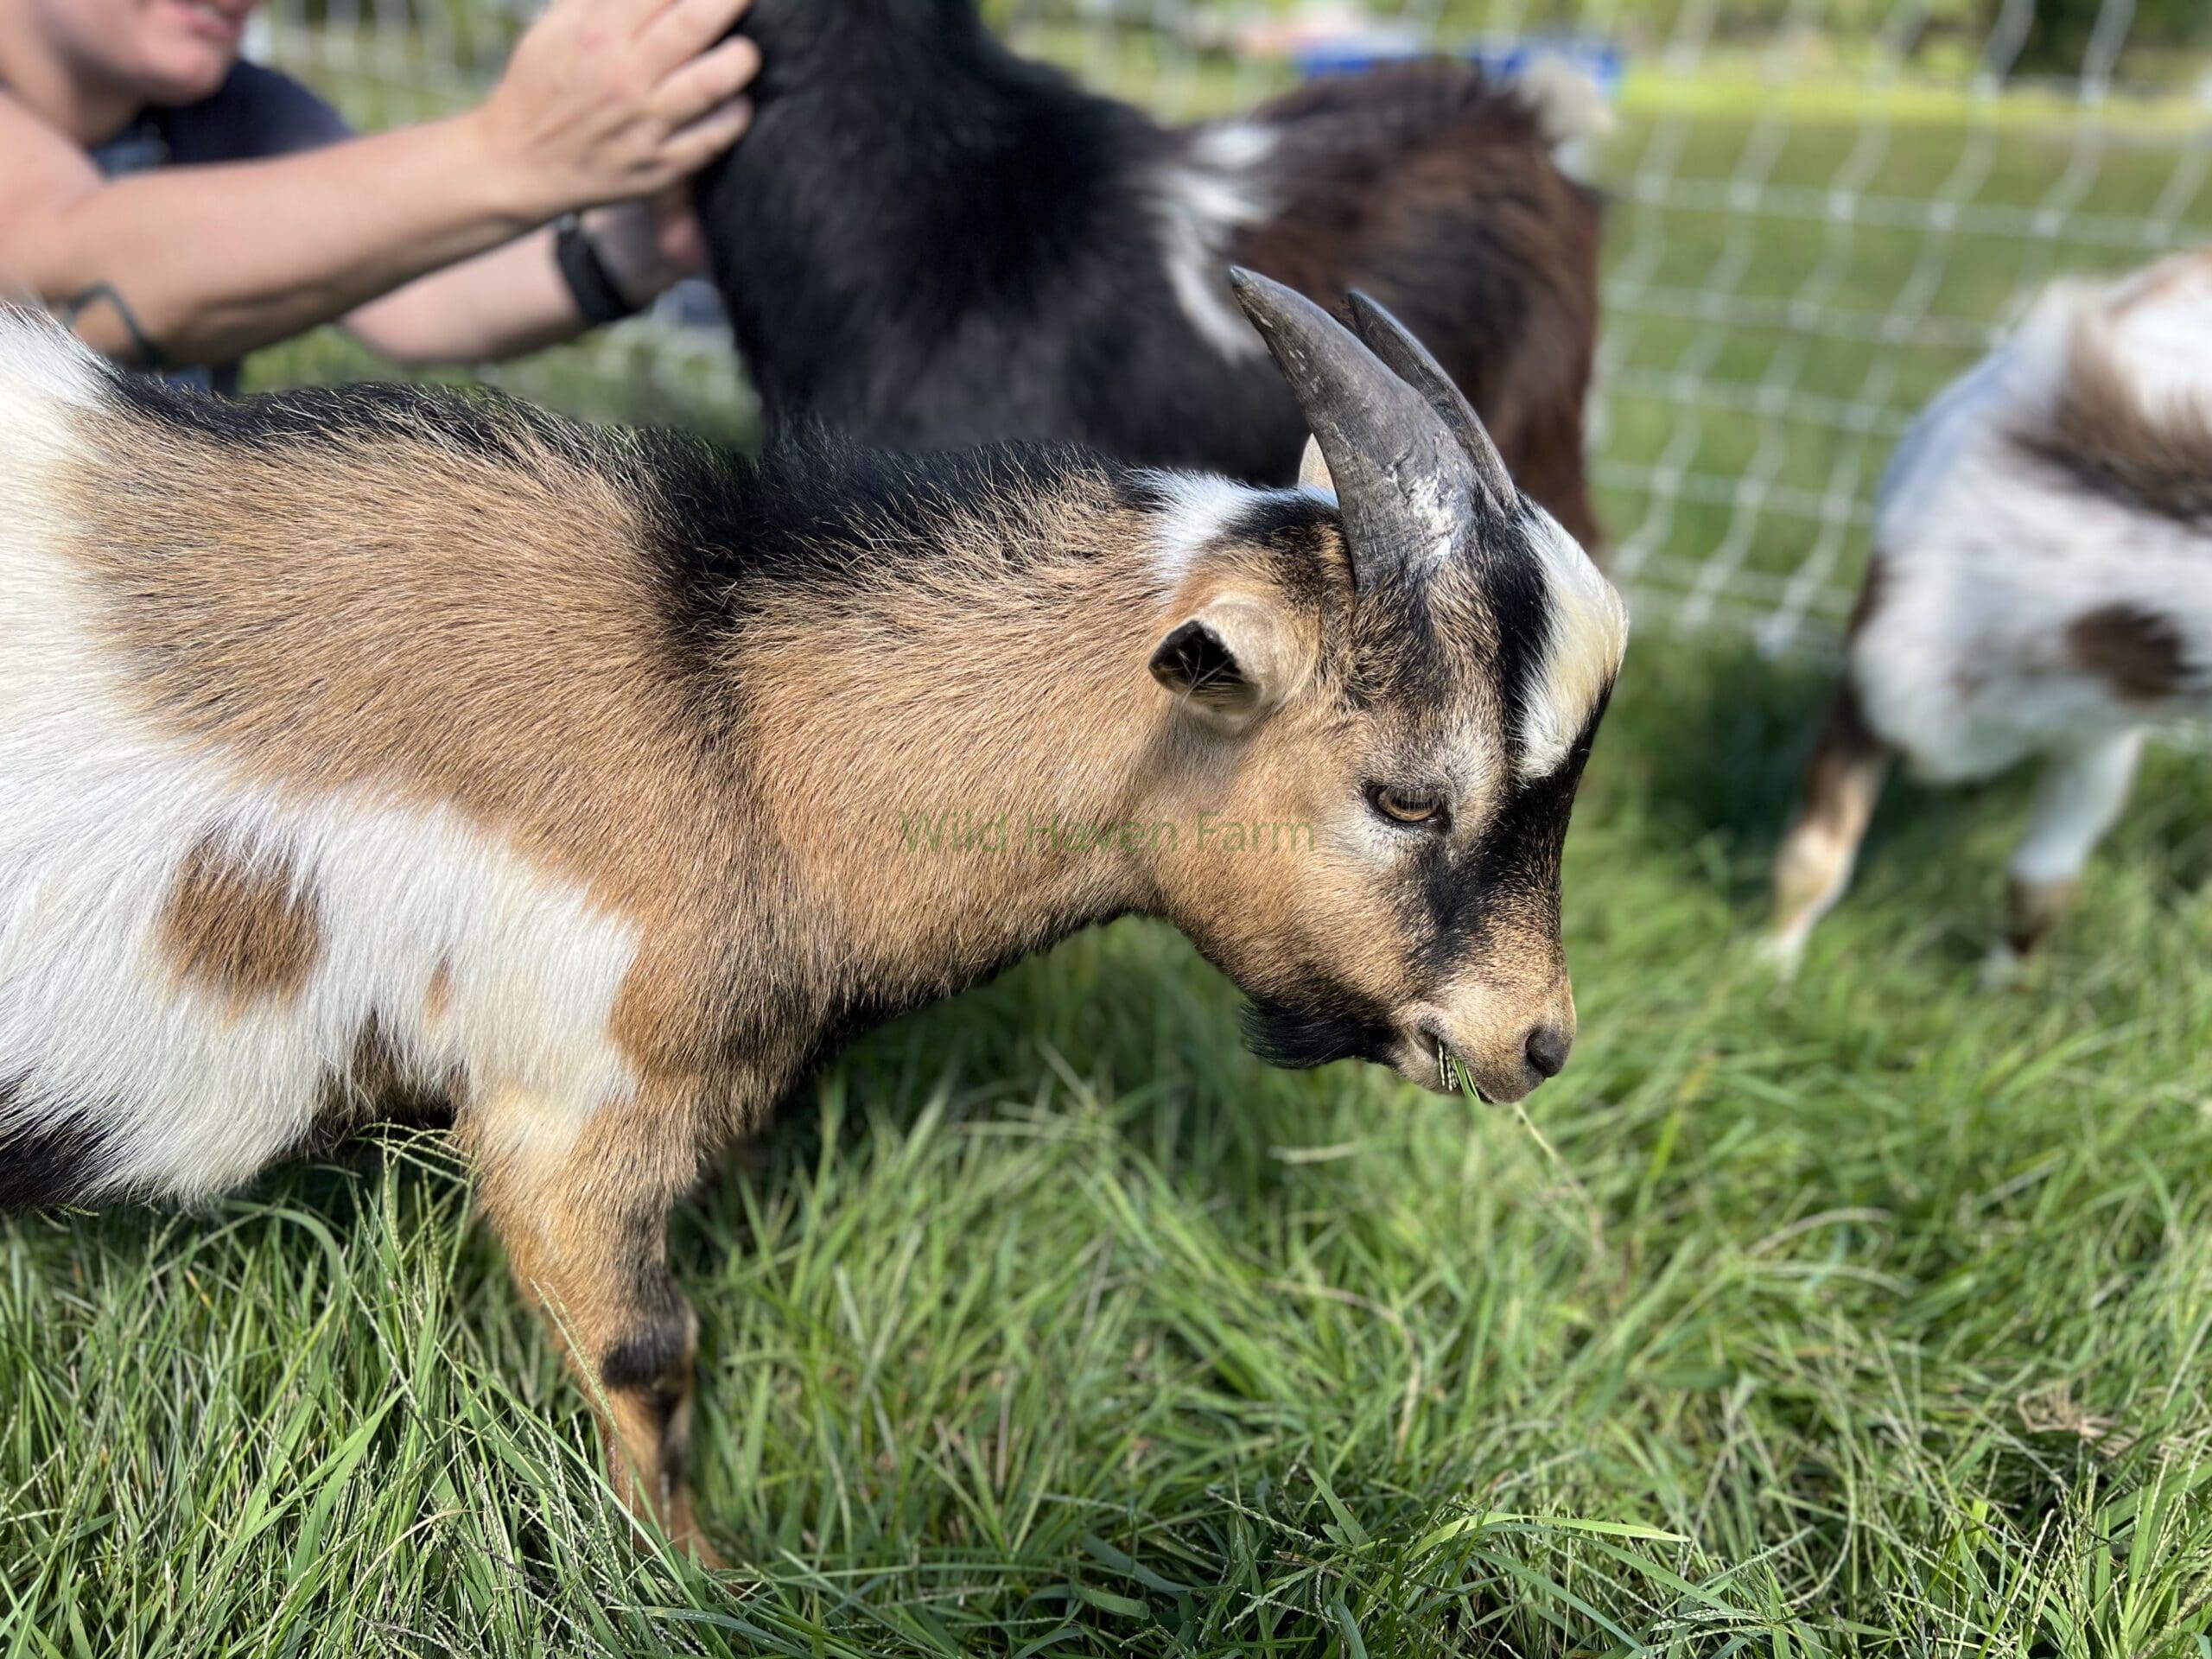 Buckling goat on a lawn